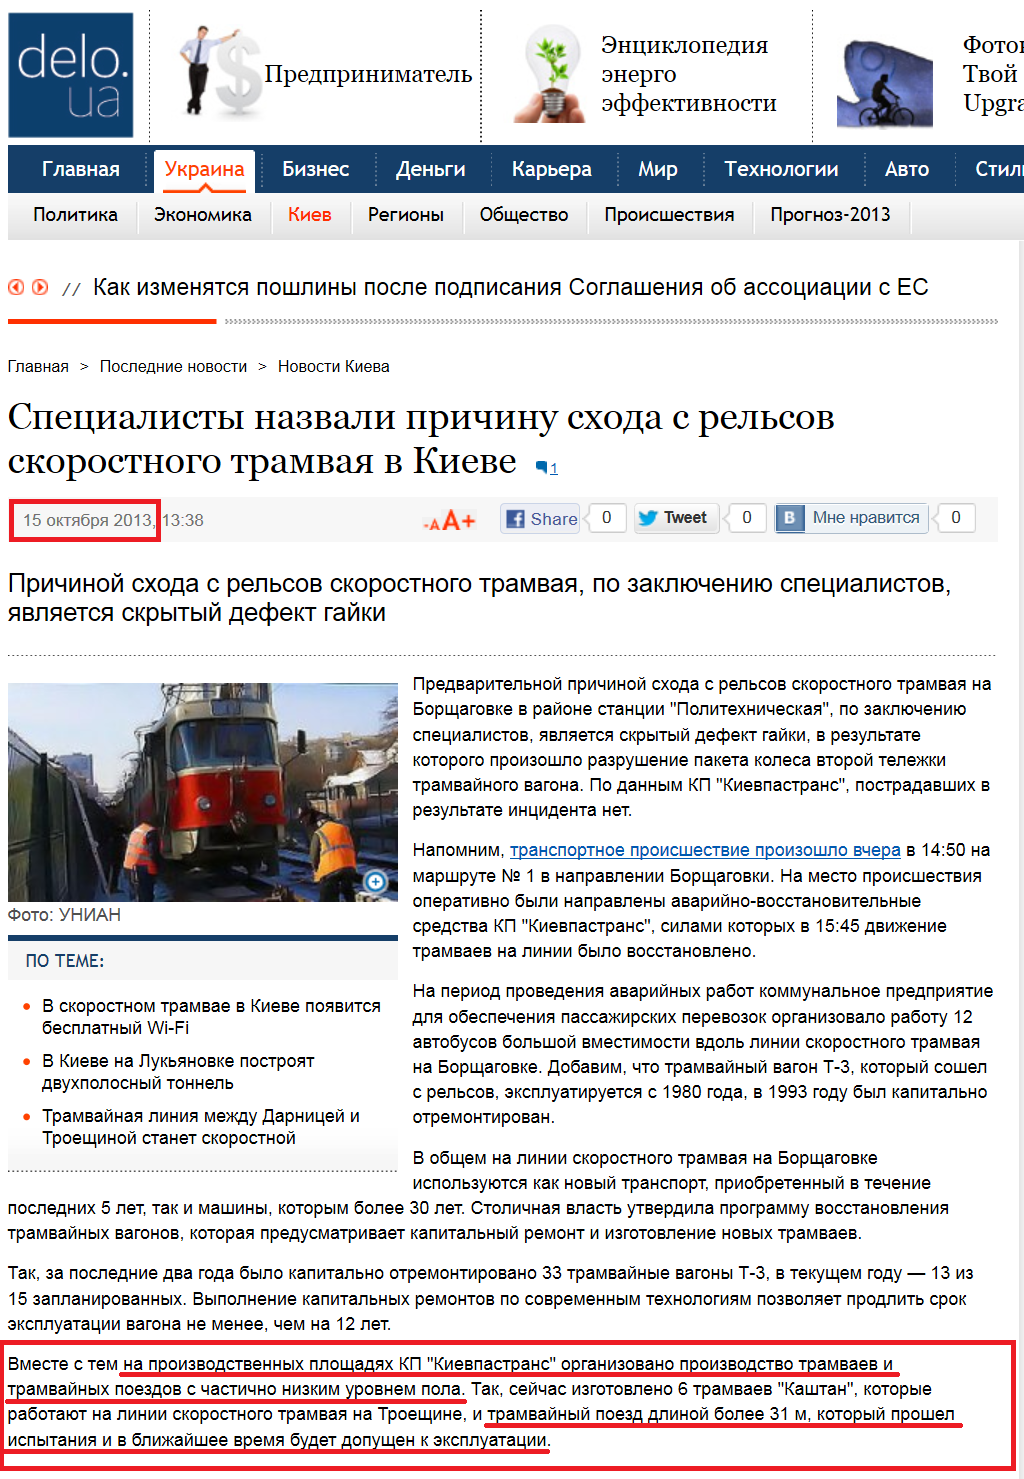 http://delo.ua/ukraine/specialisty-nazvali-prichinu-shoda-s-relsov-skorostnogo-tramvaja-217422/?supdated_new=1381993303